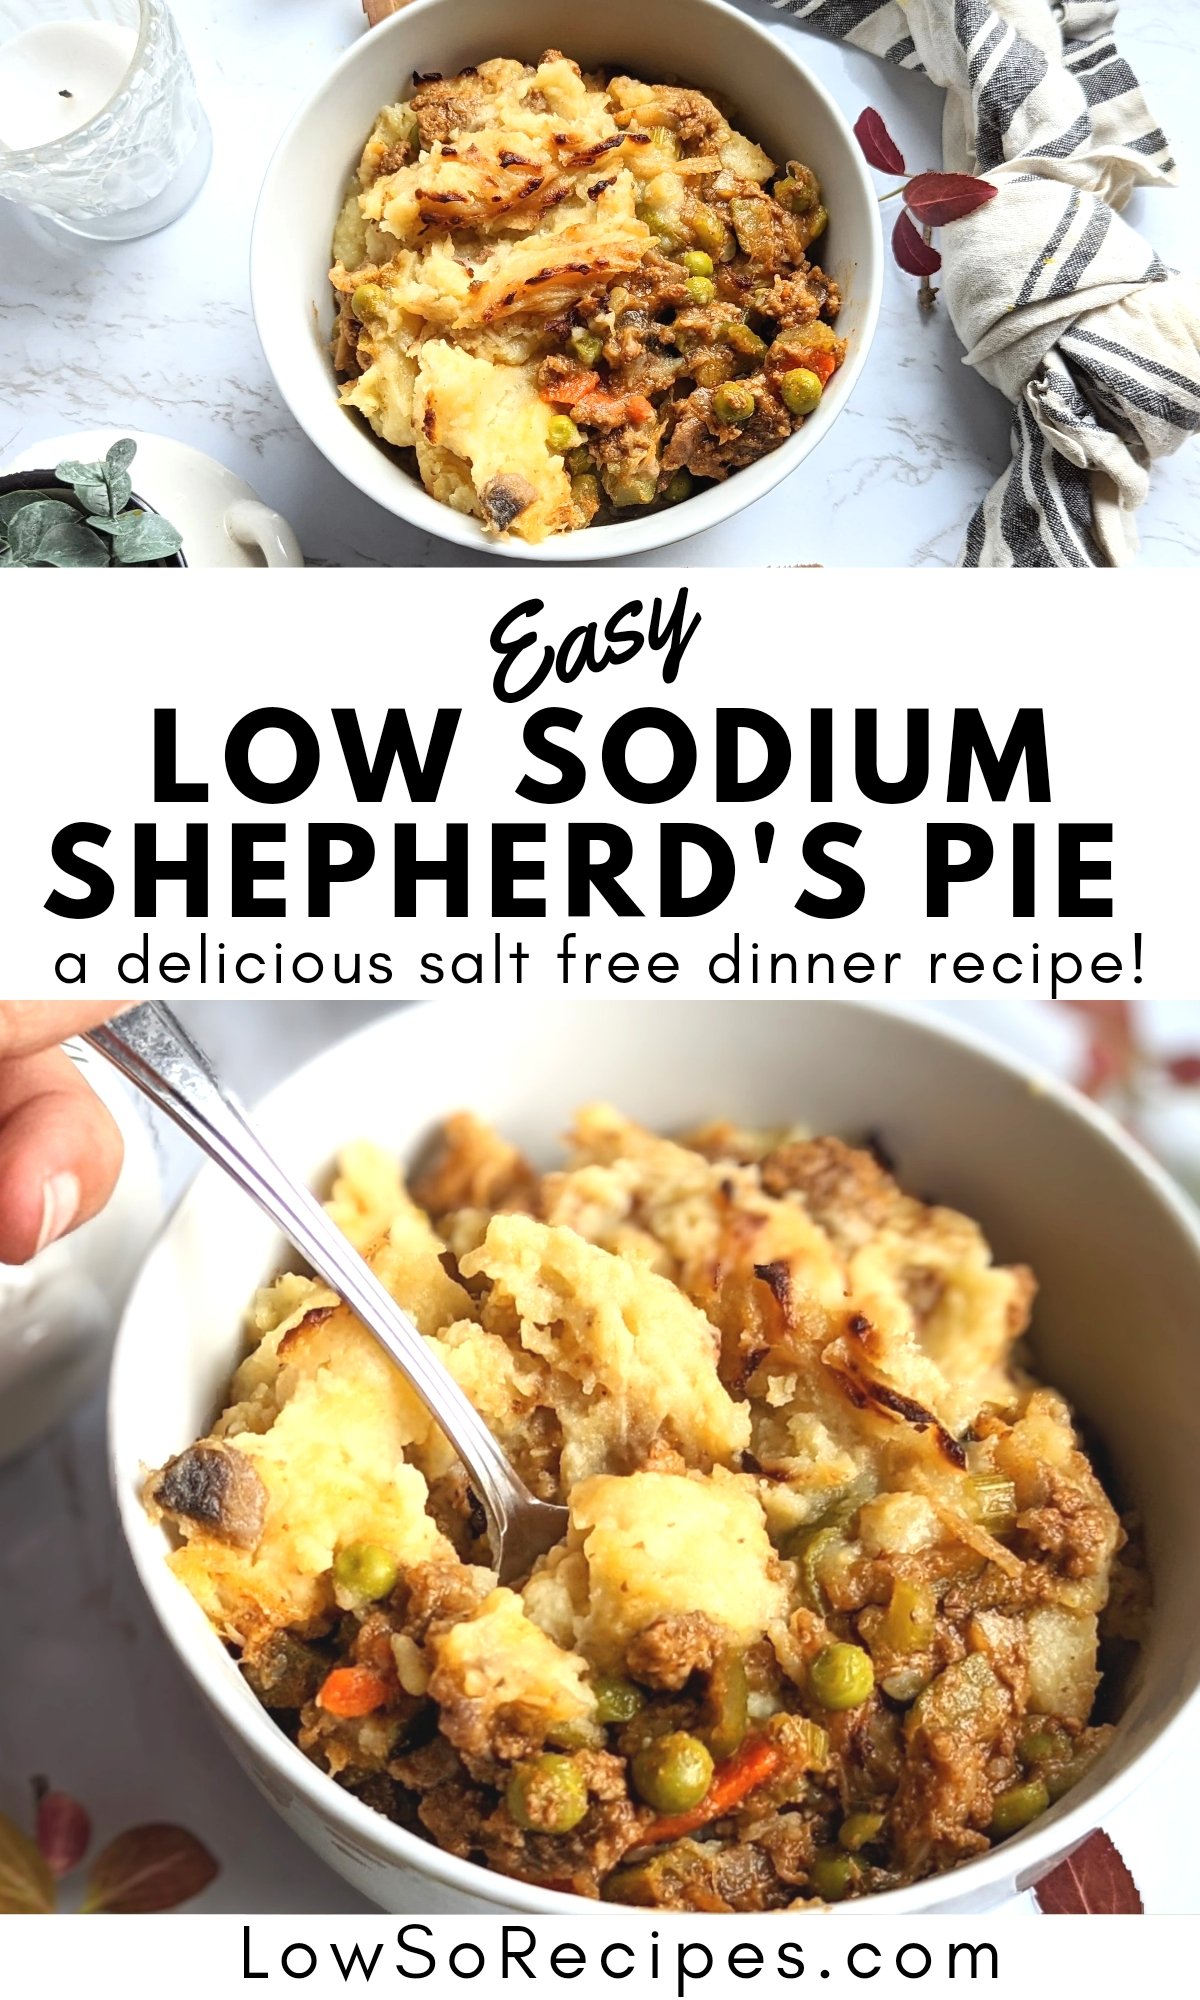 low sodium shepherd's pie recipe salt free dinner ideas healthy shepherd's pie no salt with garlic mashed potatoes